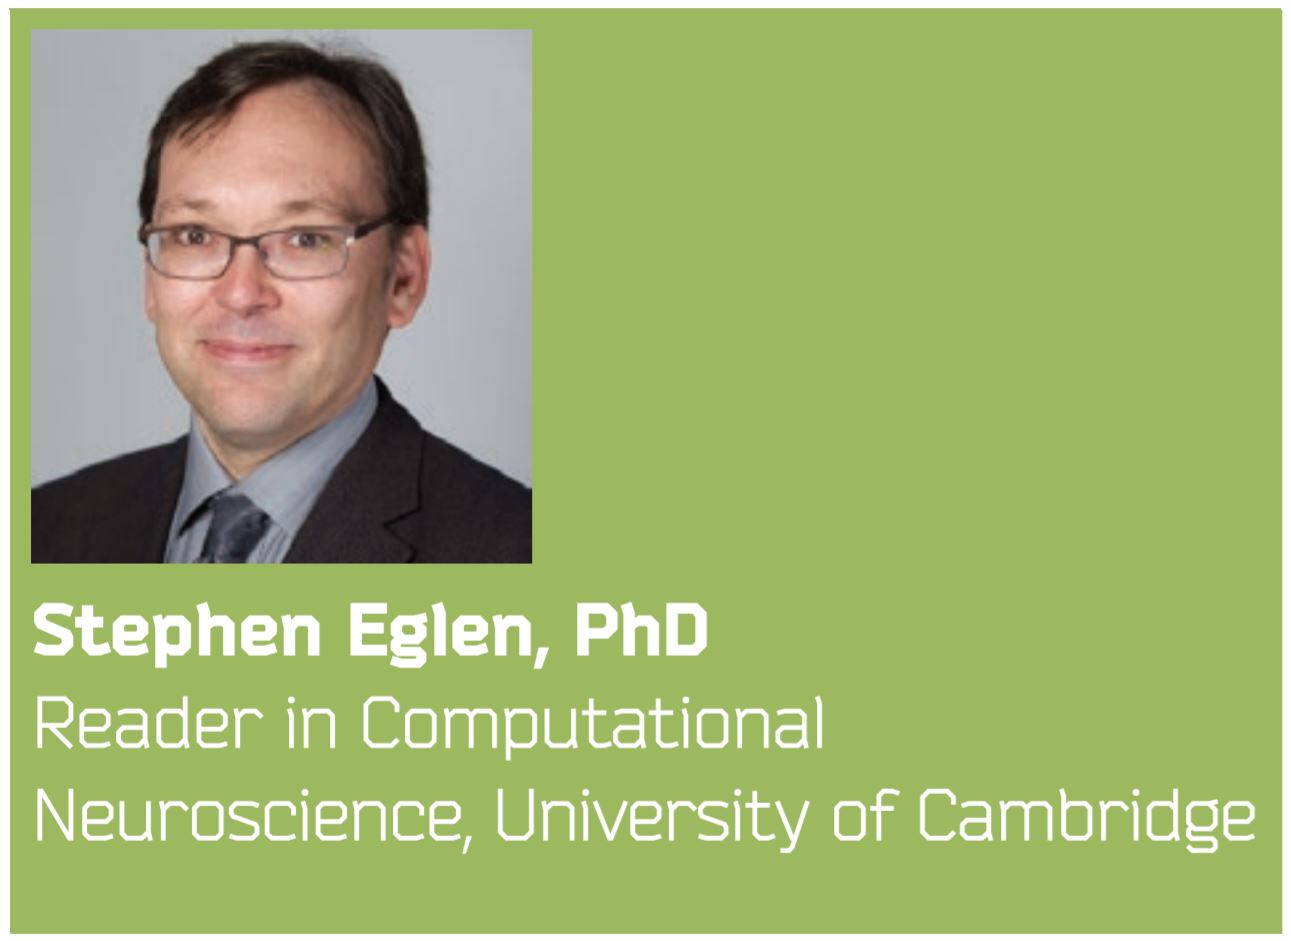 Stephen Eglen, PhD. Reader in computational neuroscience at the University of Cambridge